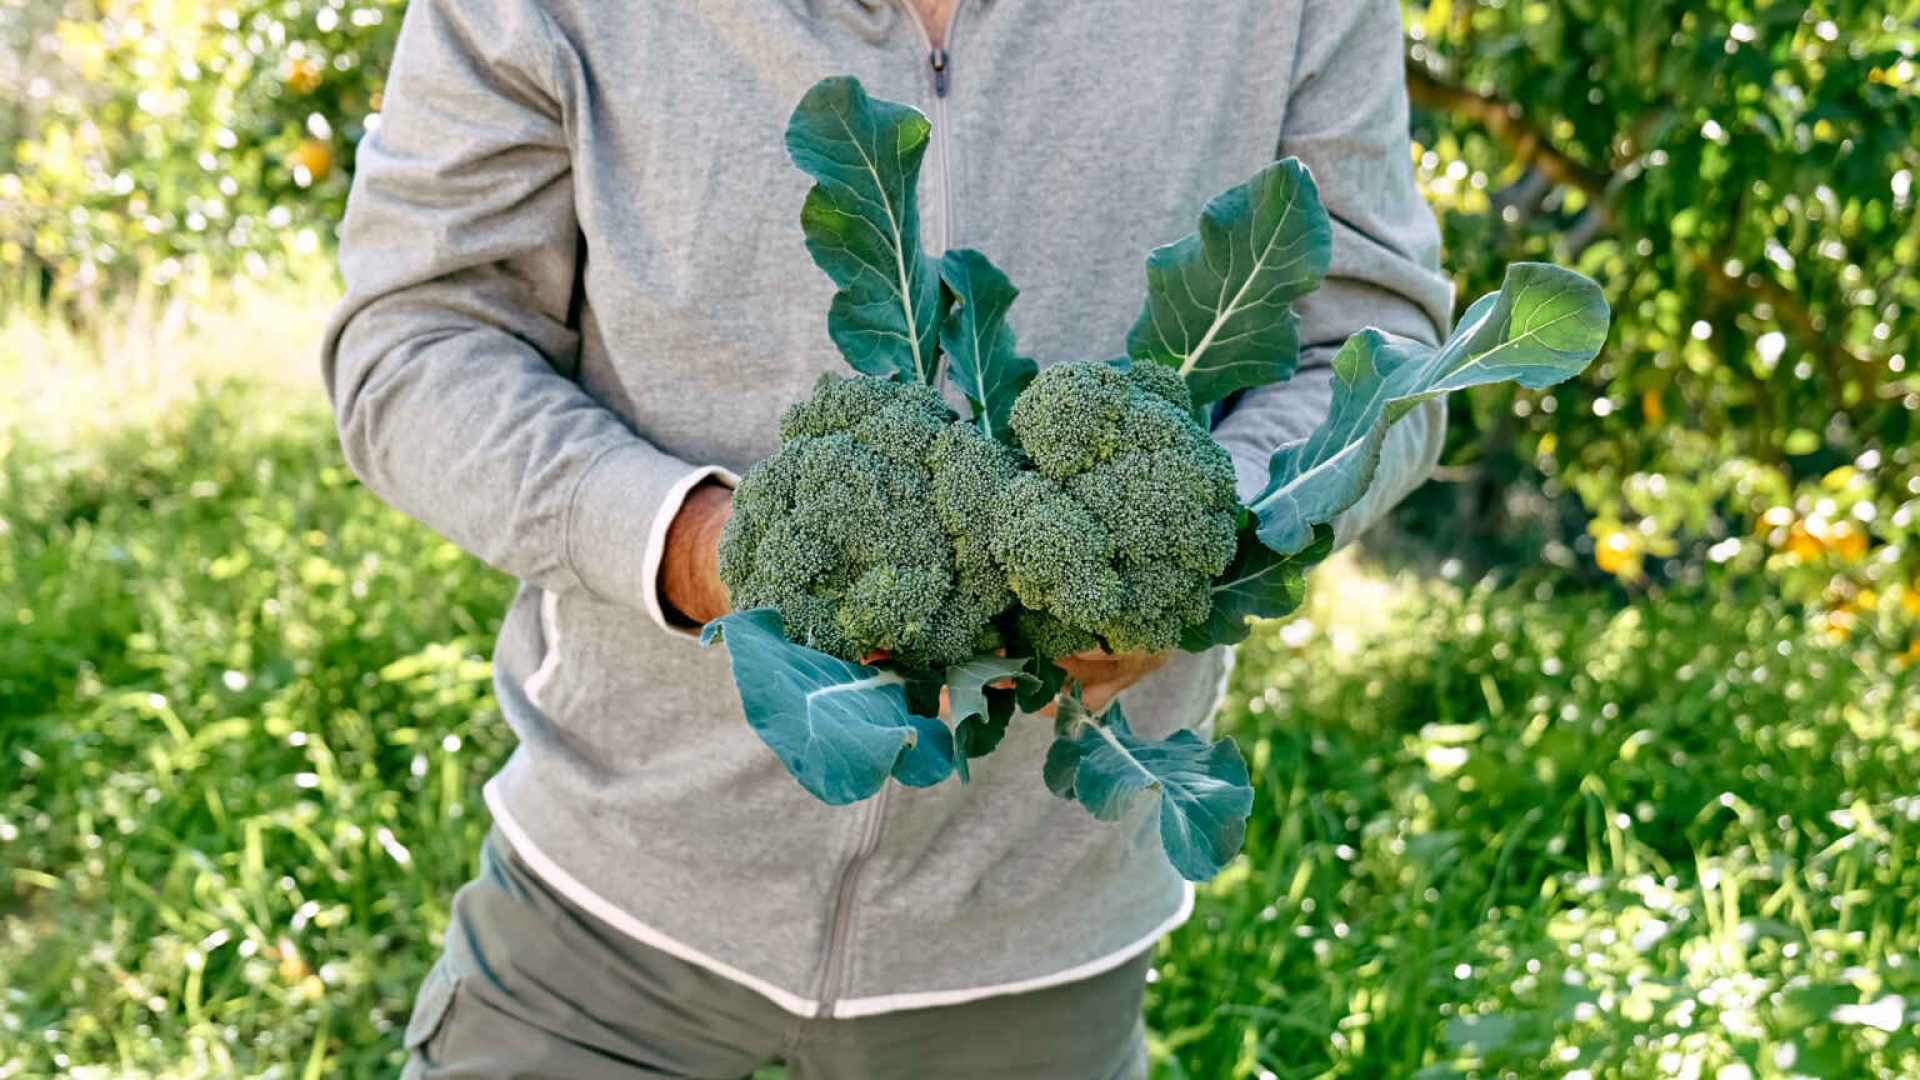 Broccoli plant growing in vegetable garden. Hands of man gardener holding ripe broccoli. Seasonal healthy eating. Organic gardening.